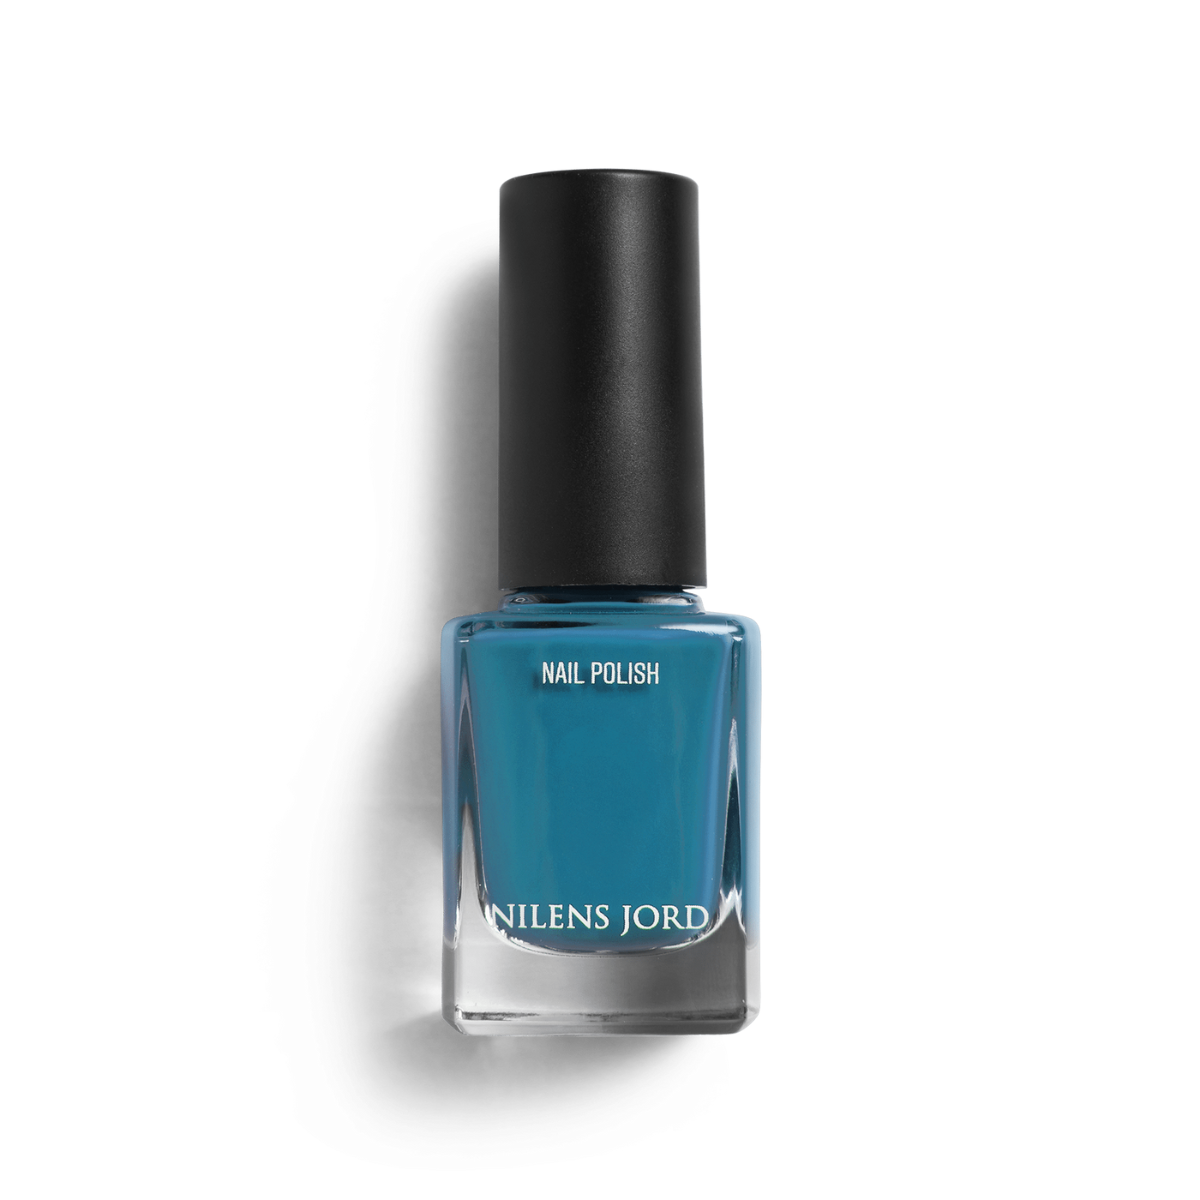 Nilens Jord - Nail Polish – Teal Blue